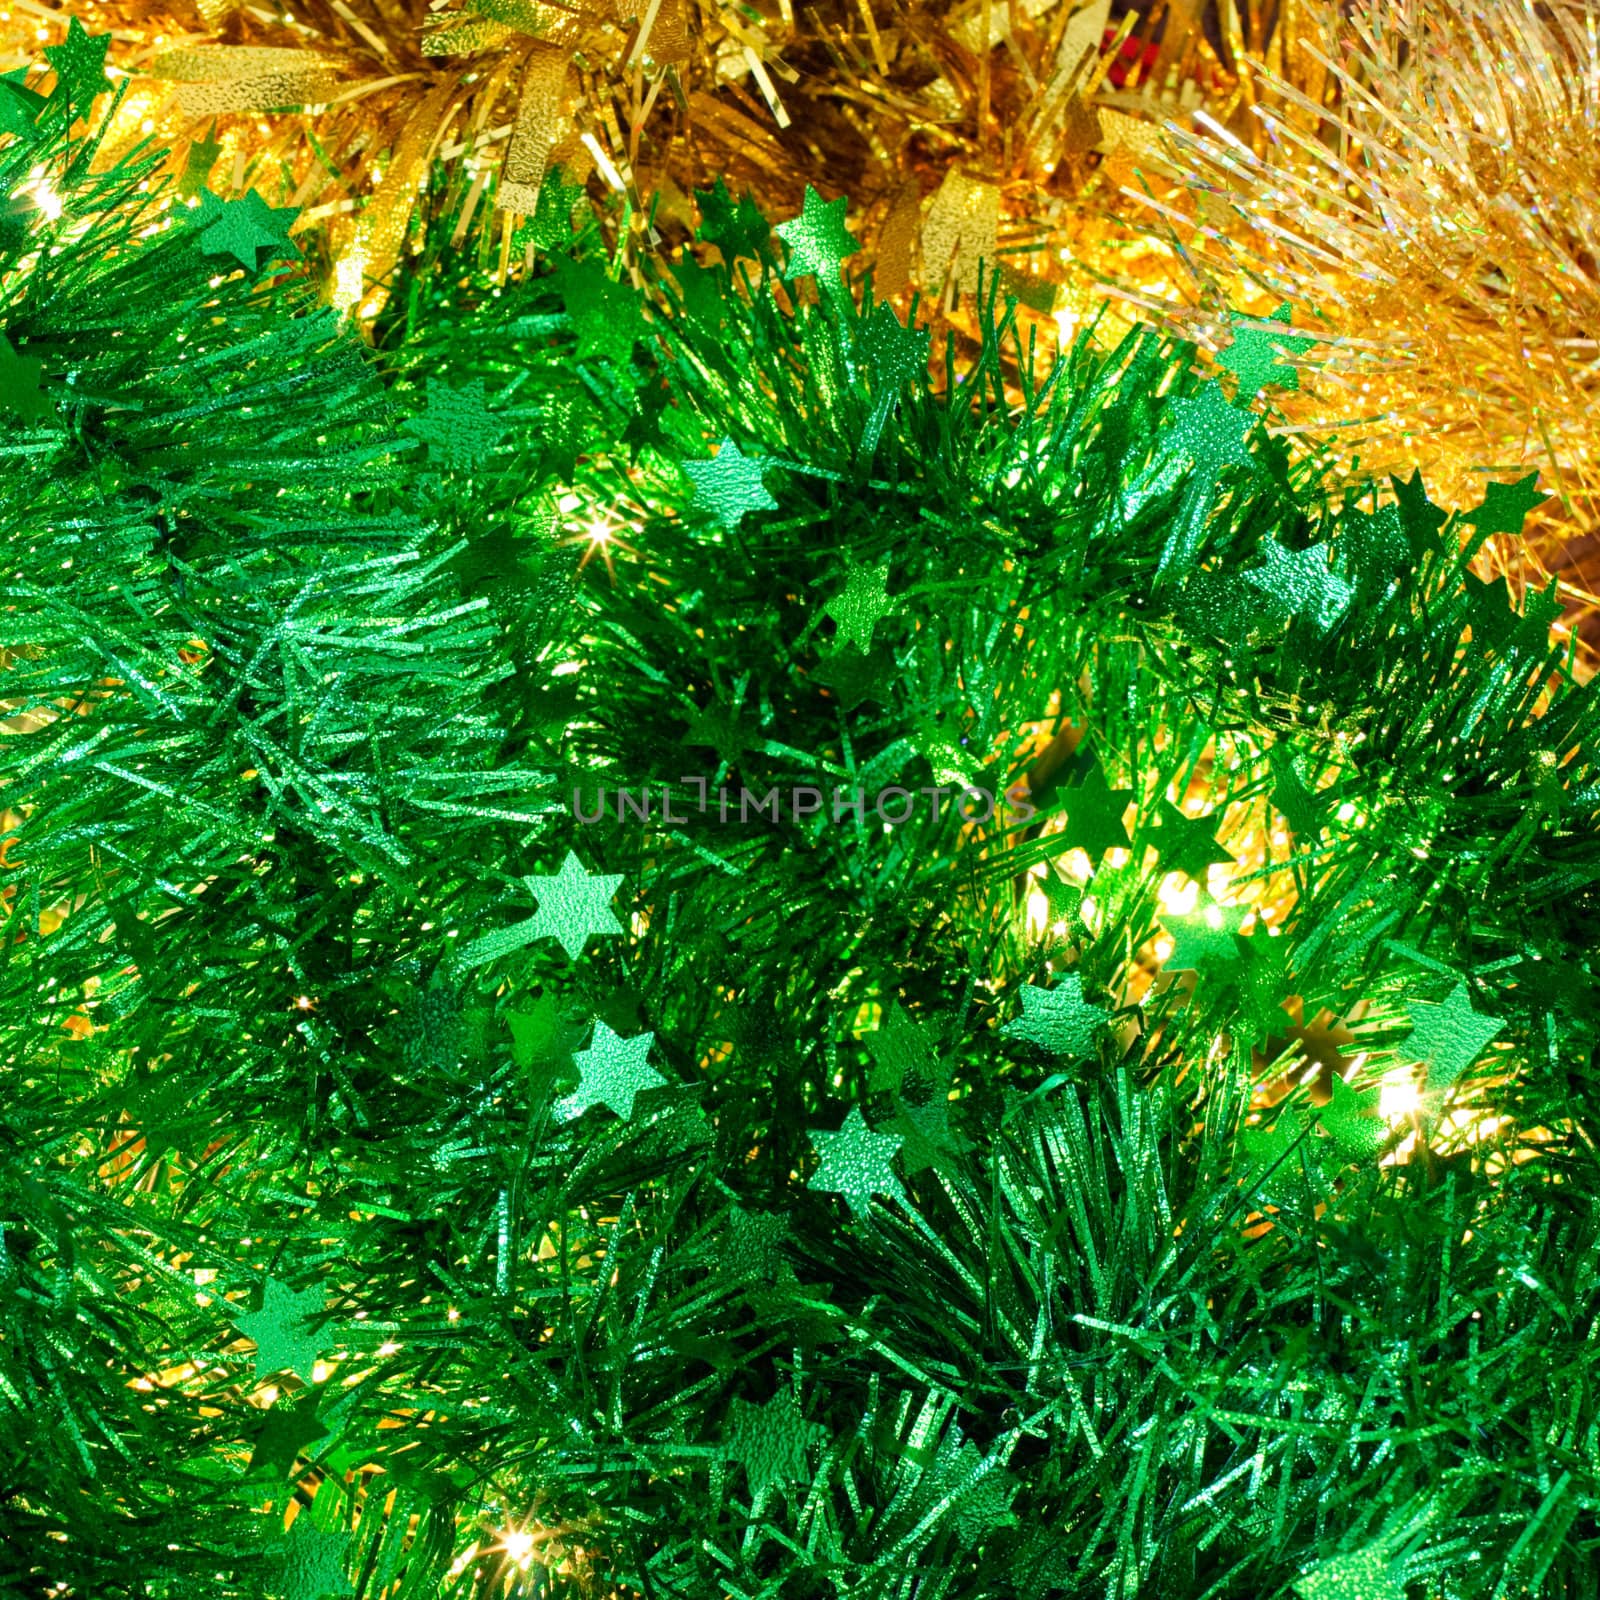 Christmas green and yellow tinsel with lights